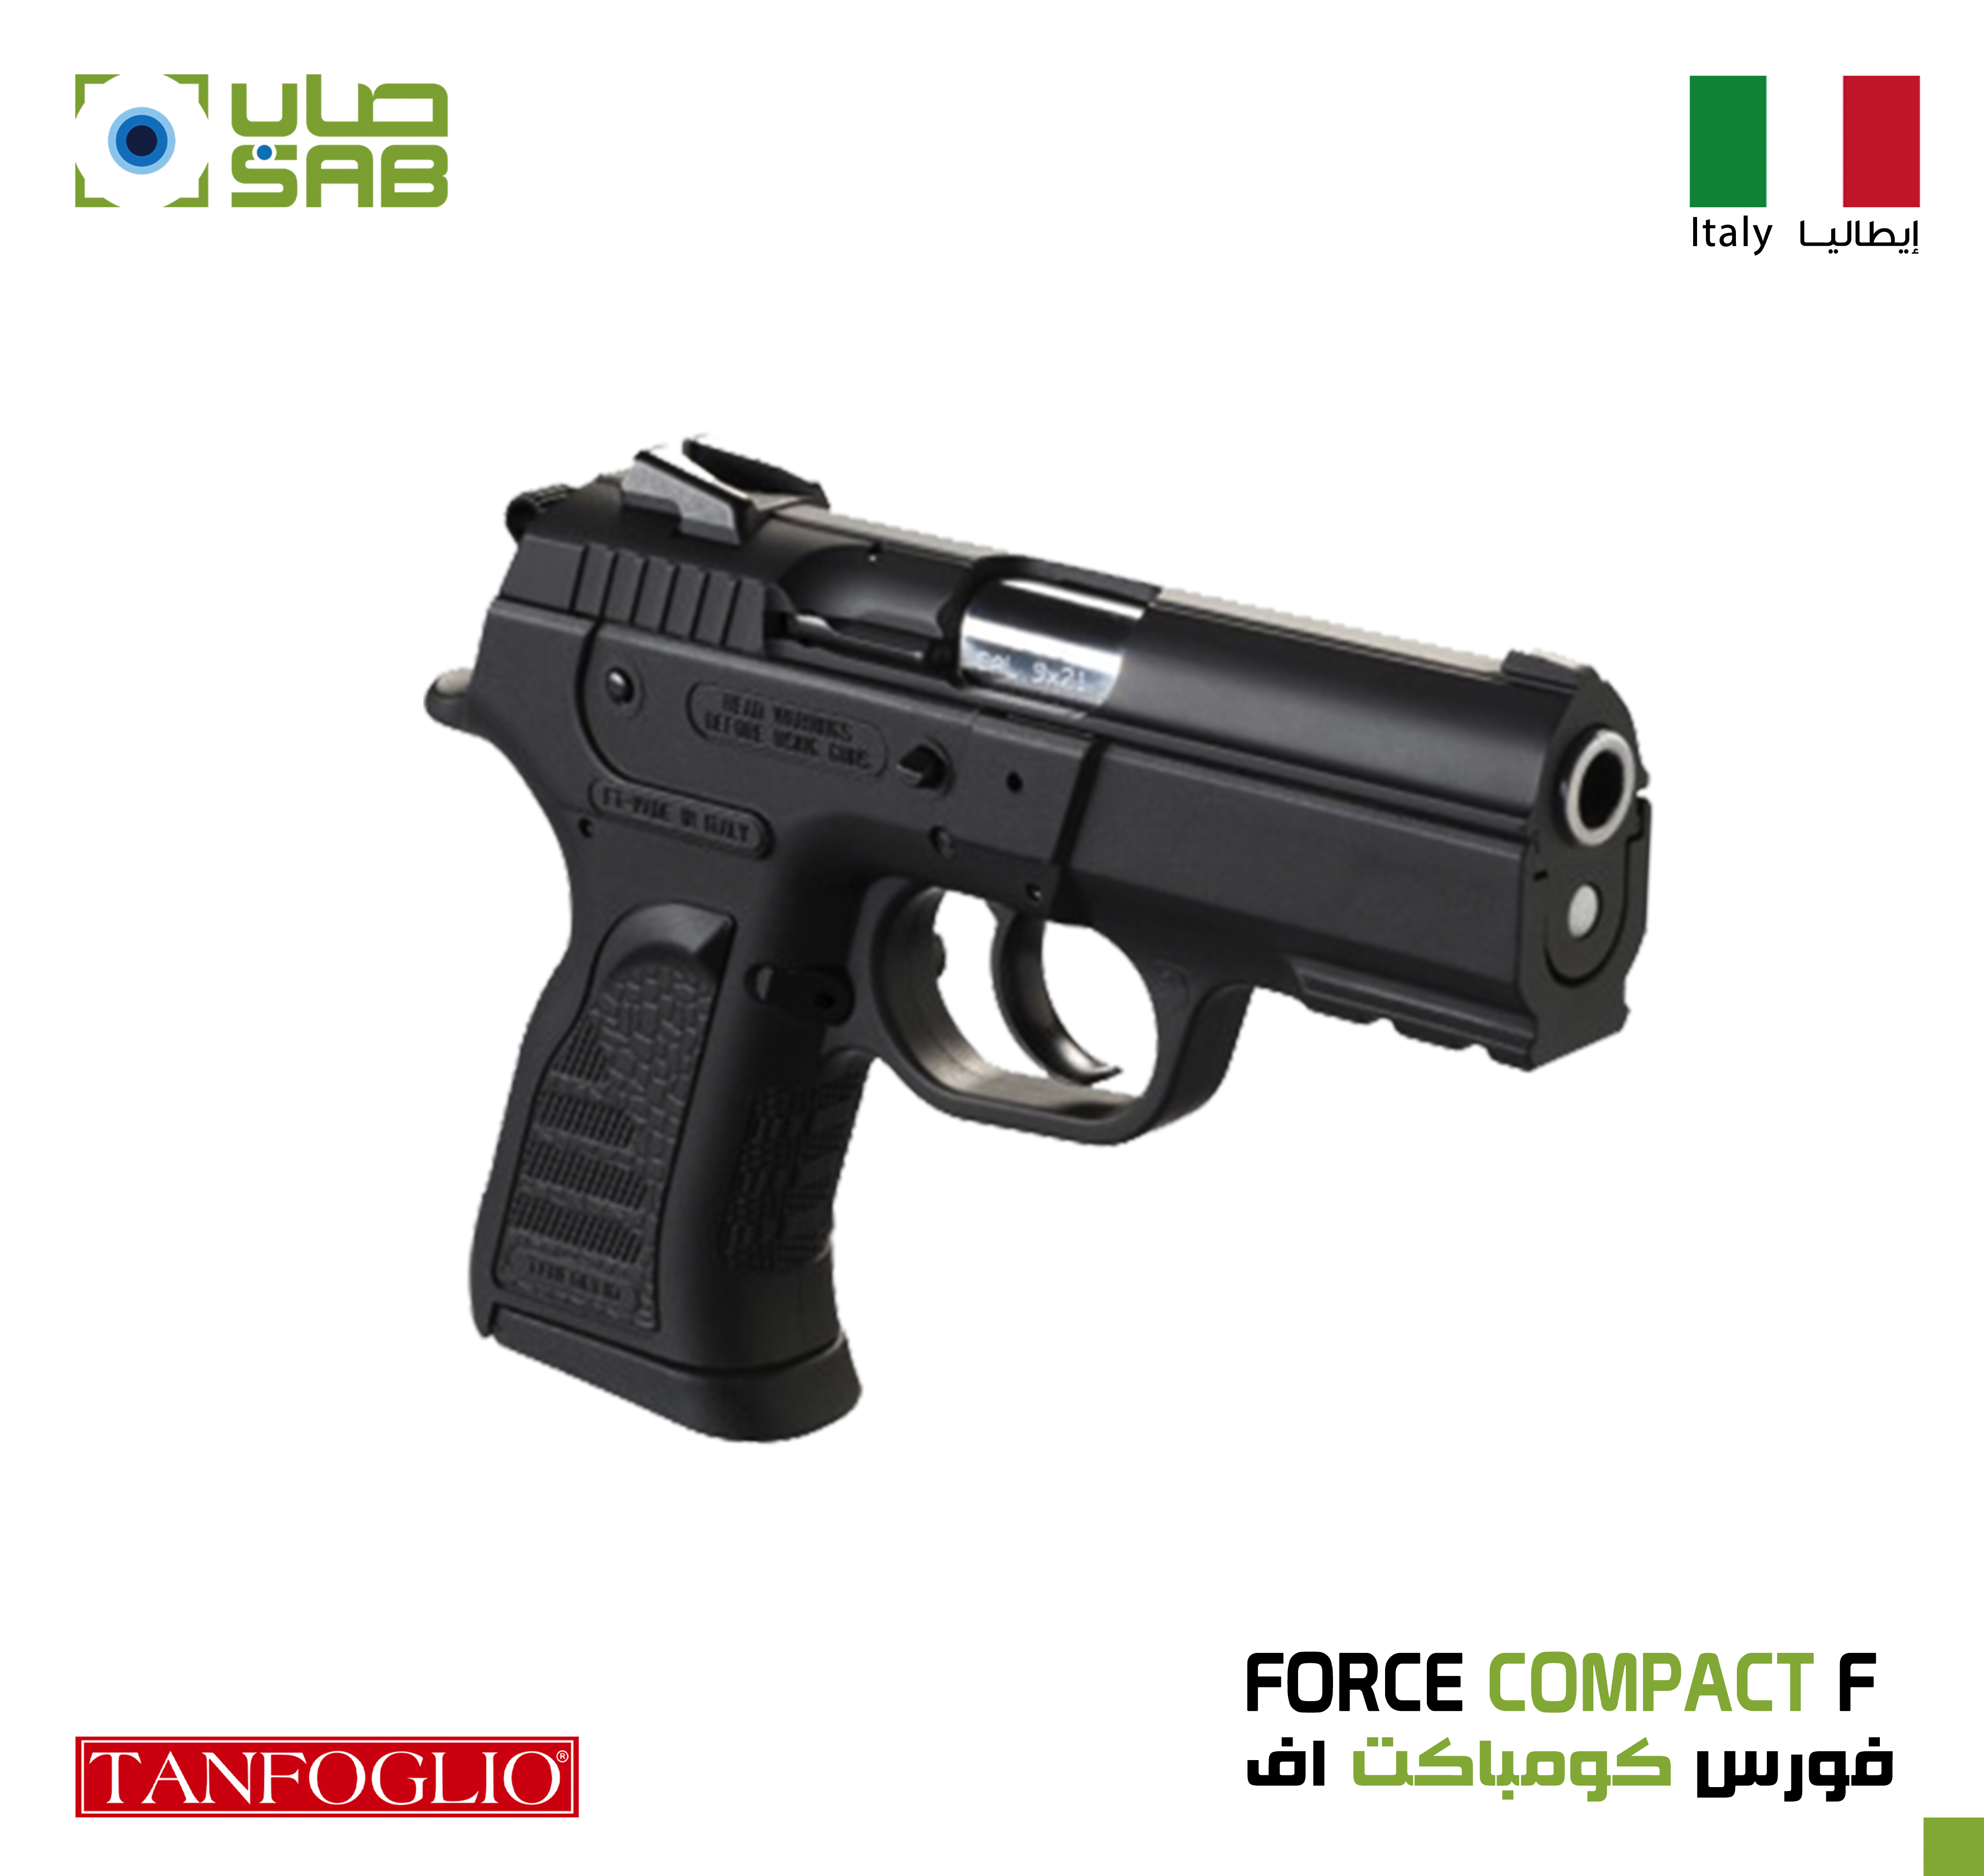 9mm - Tanfoglio - FORCE COMPACT F